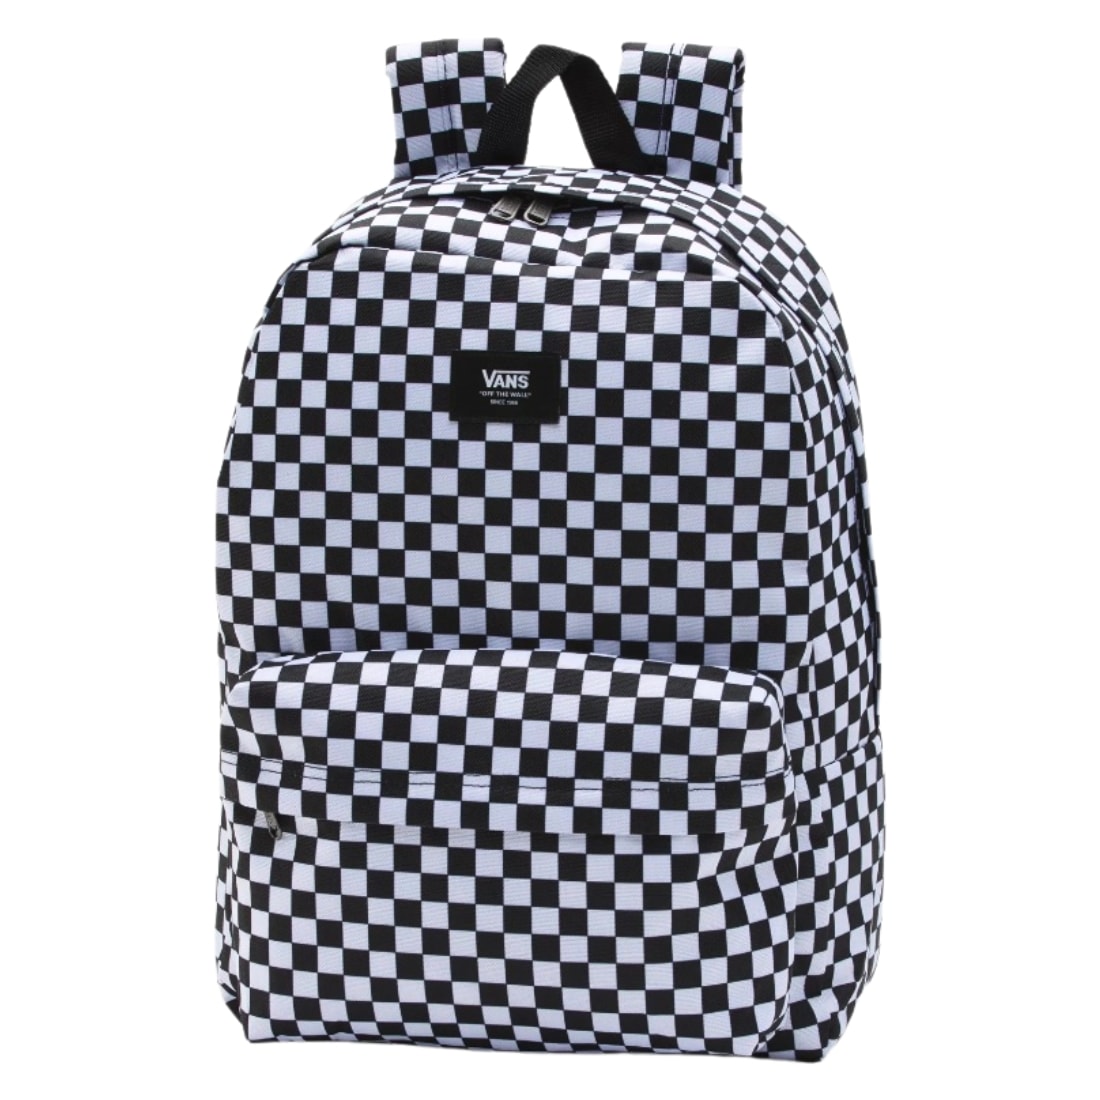 Vans Old Skool Grom Backpack - Black White Checkers - Backpack by Vans One Size